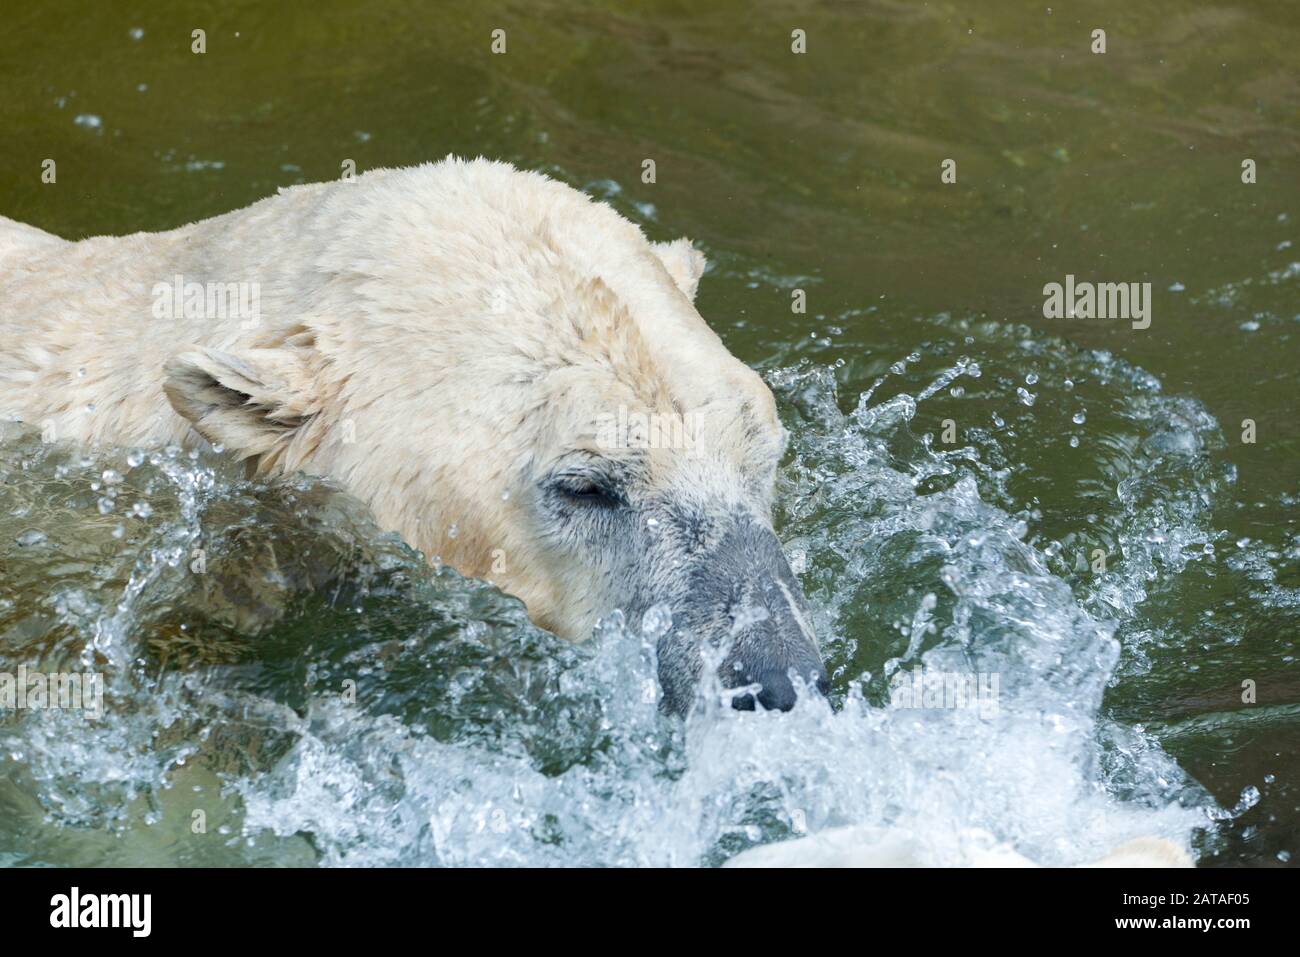 Big Polar Bear Is Swimming In The Water. Ursus Maritimus. Animals In Wildlife. Stock Photo